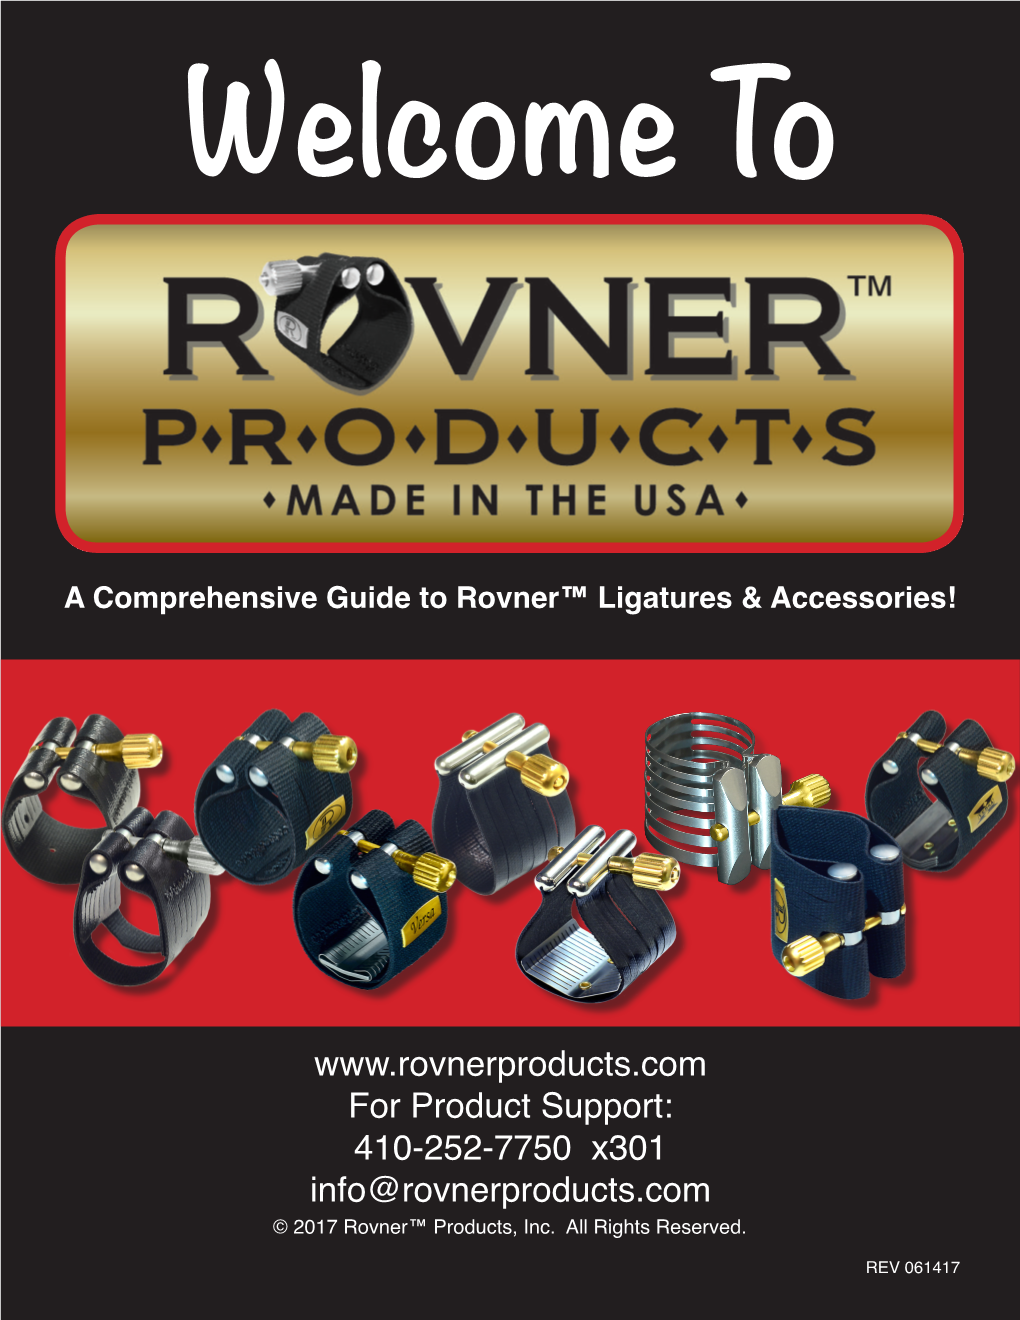 A Comprehensive Guide to Rovner™ Ligatures & Accessories!